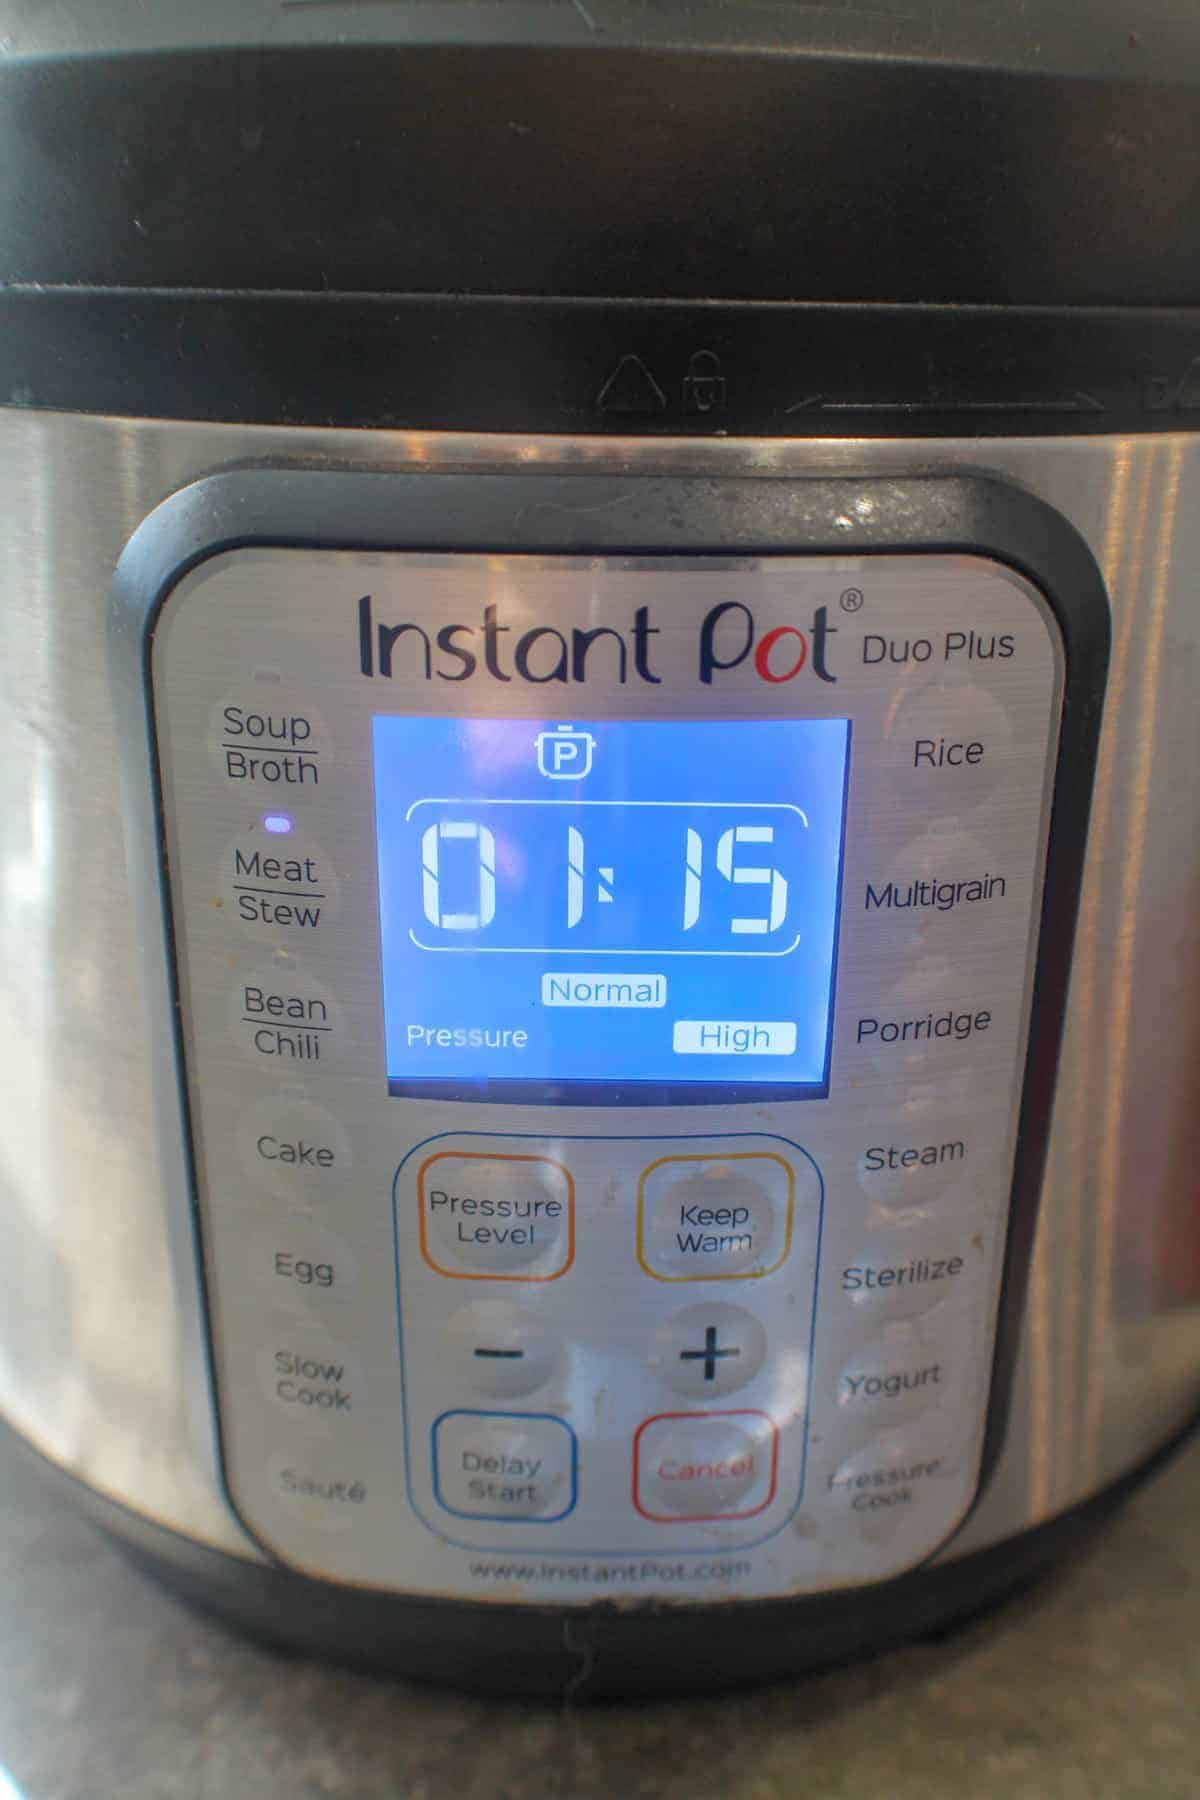 Instant Pot set to 1 hour 15 minutes.